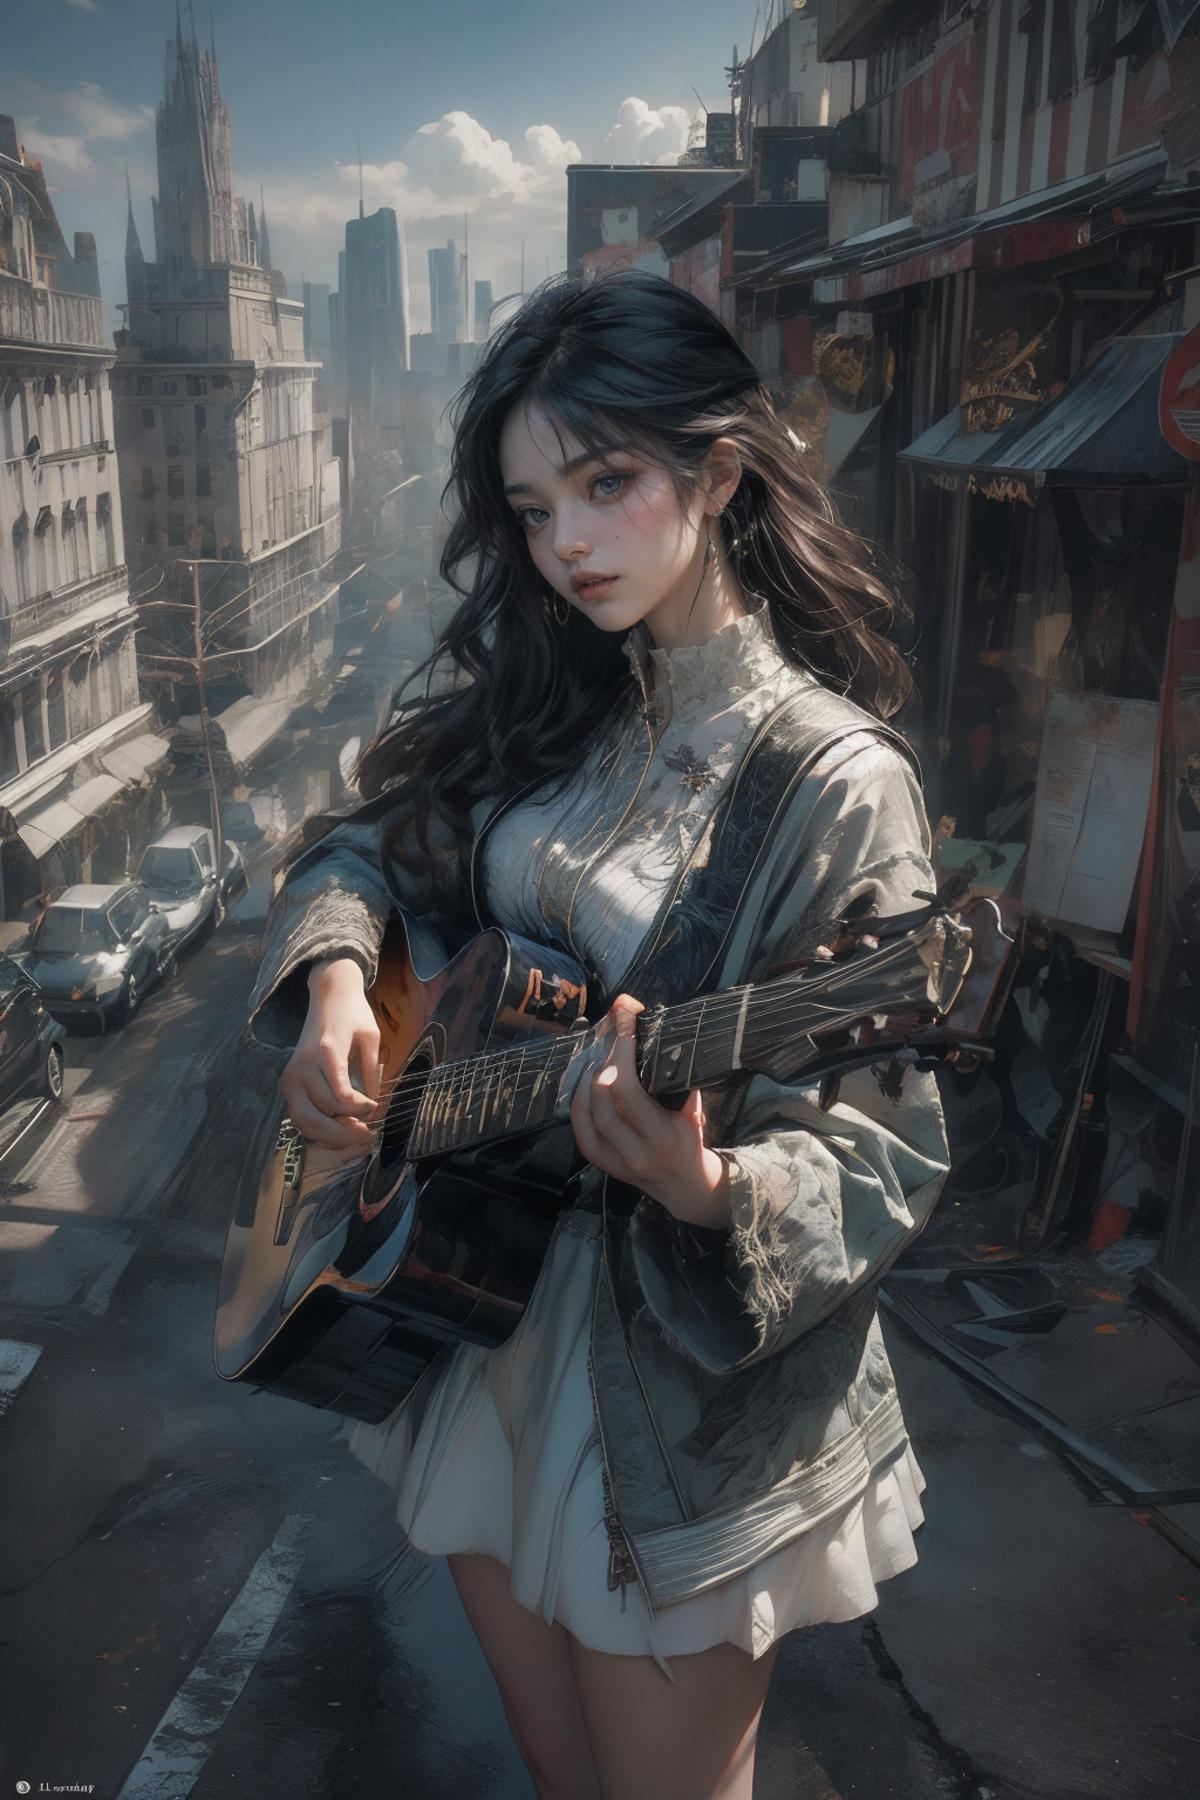 An Asian woman holding a guitar in an artistic scene.